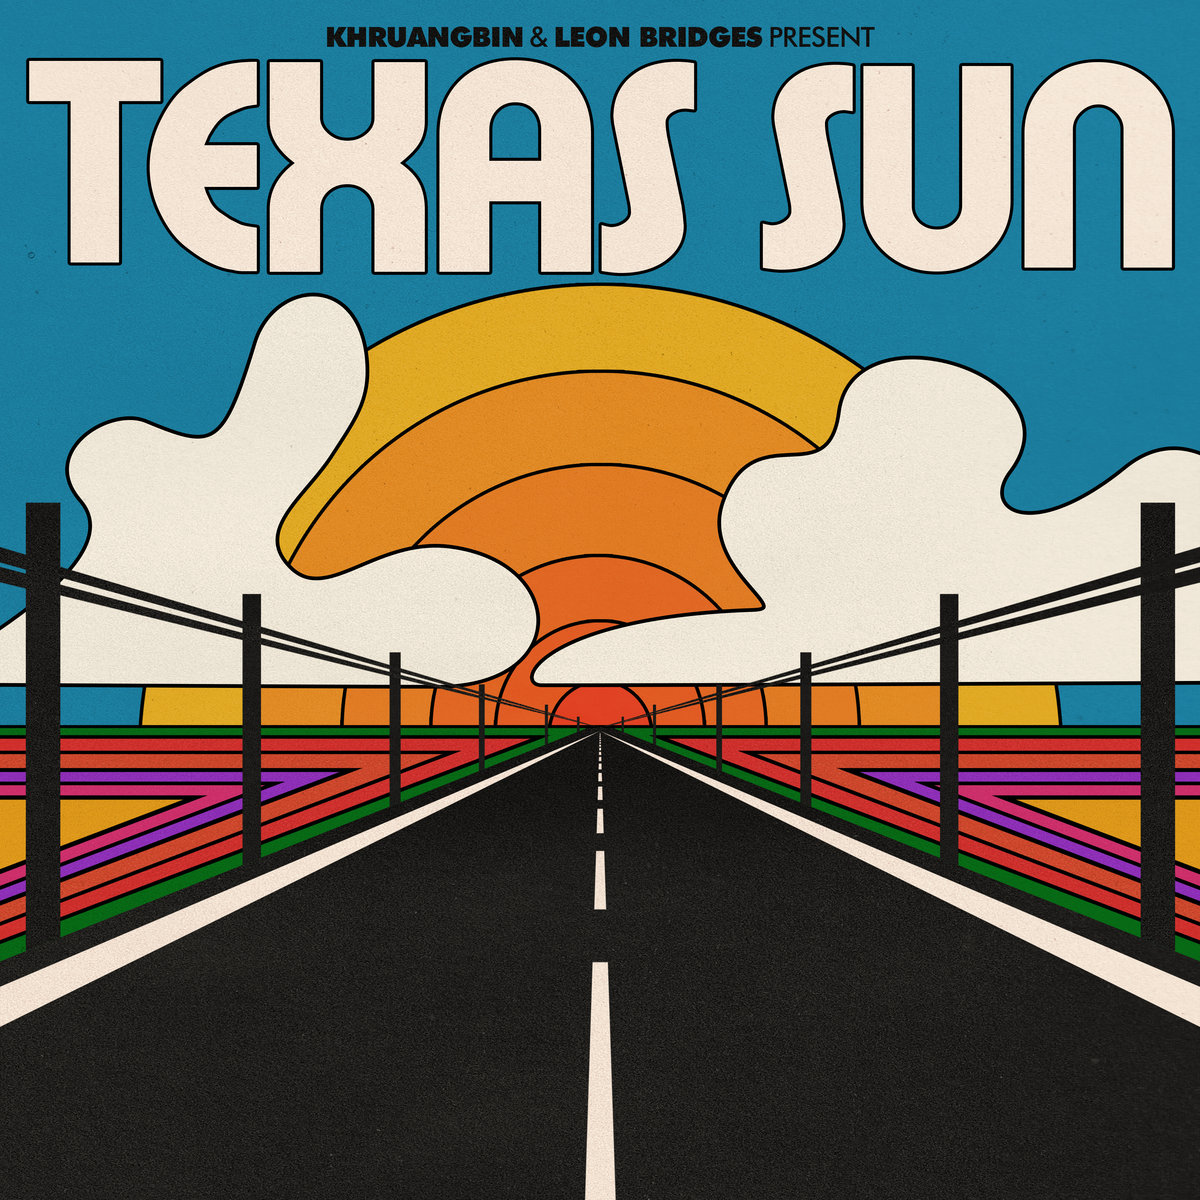 Khruangbin & Leon Bridges dropped their collaborative EP "Texas Sun"